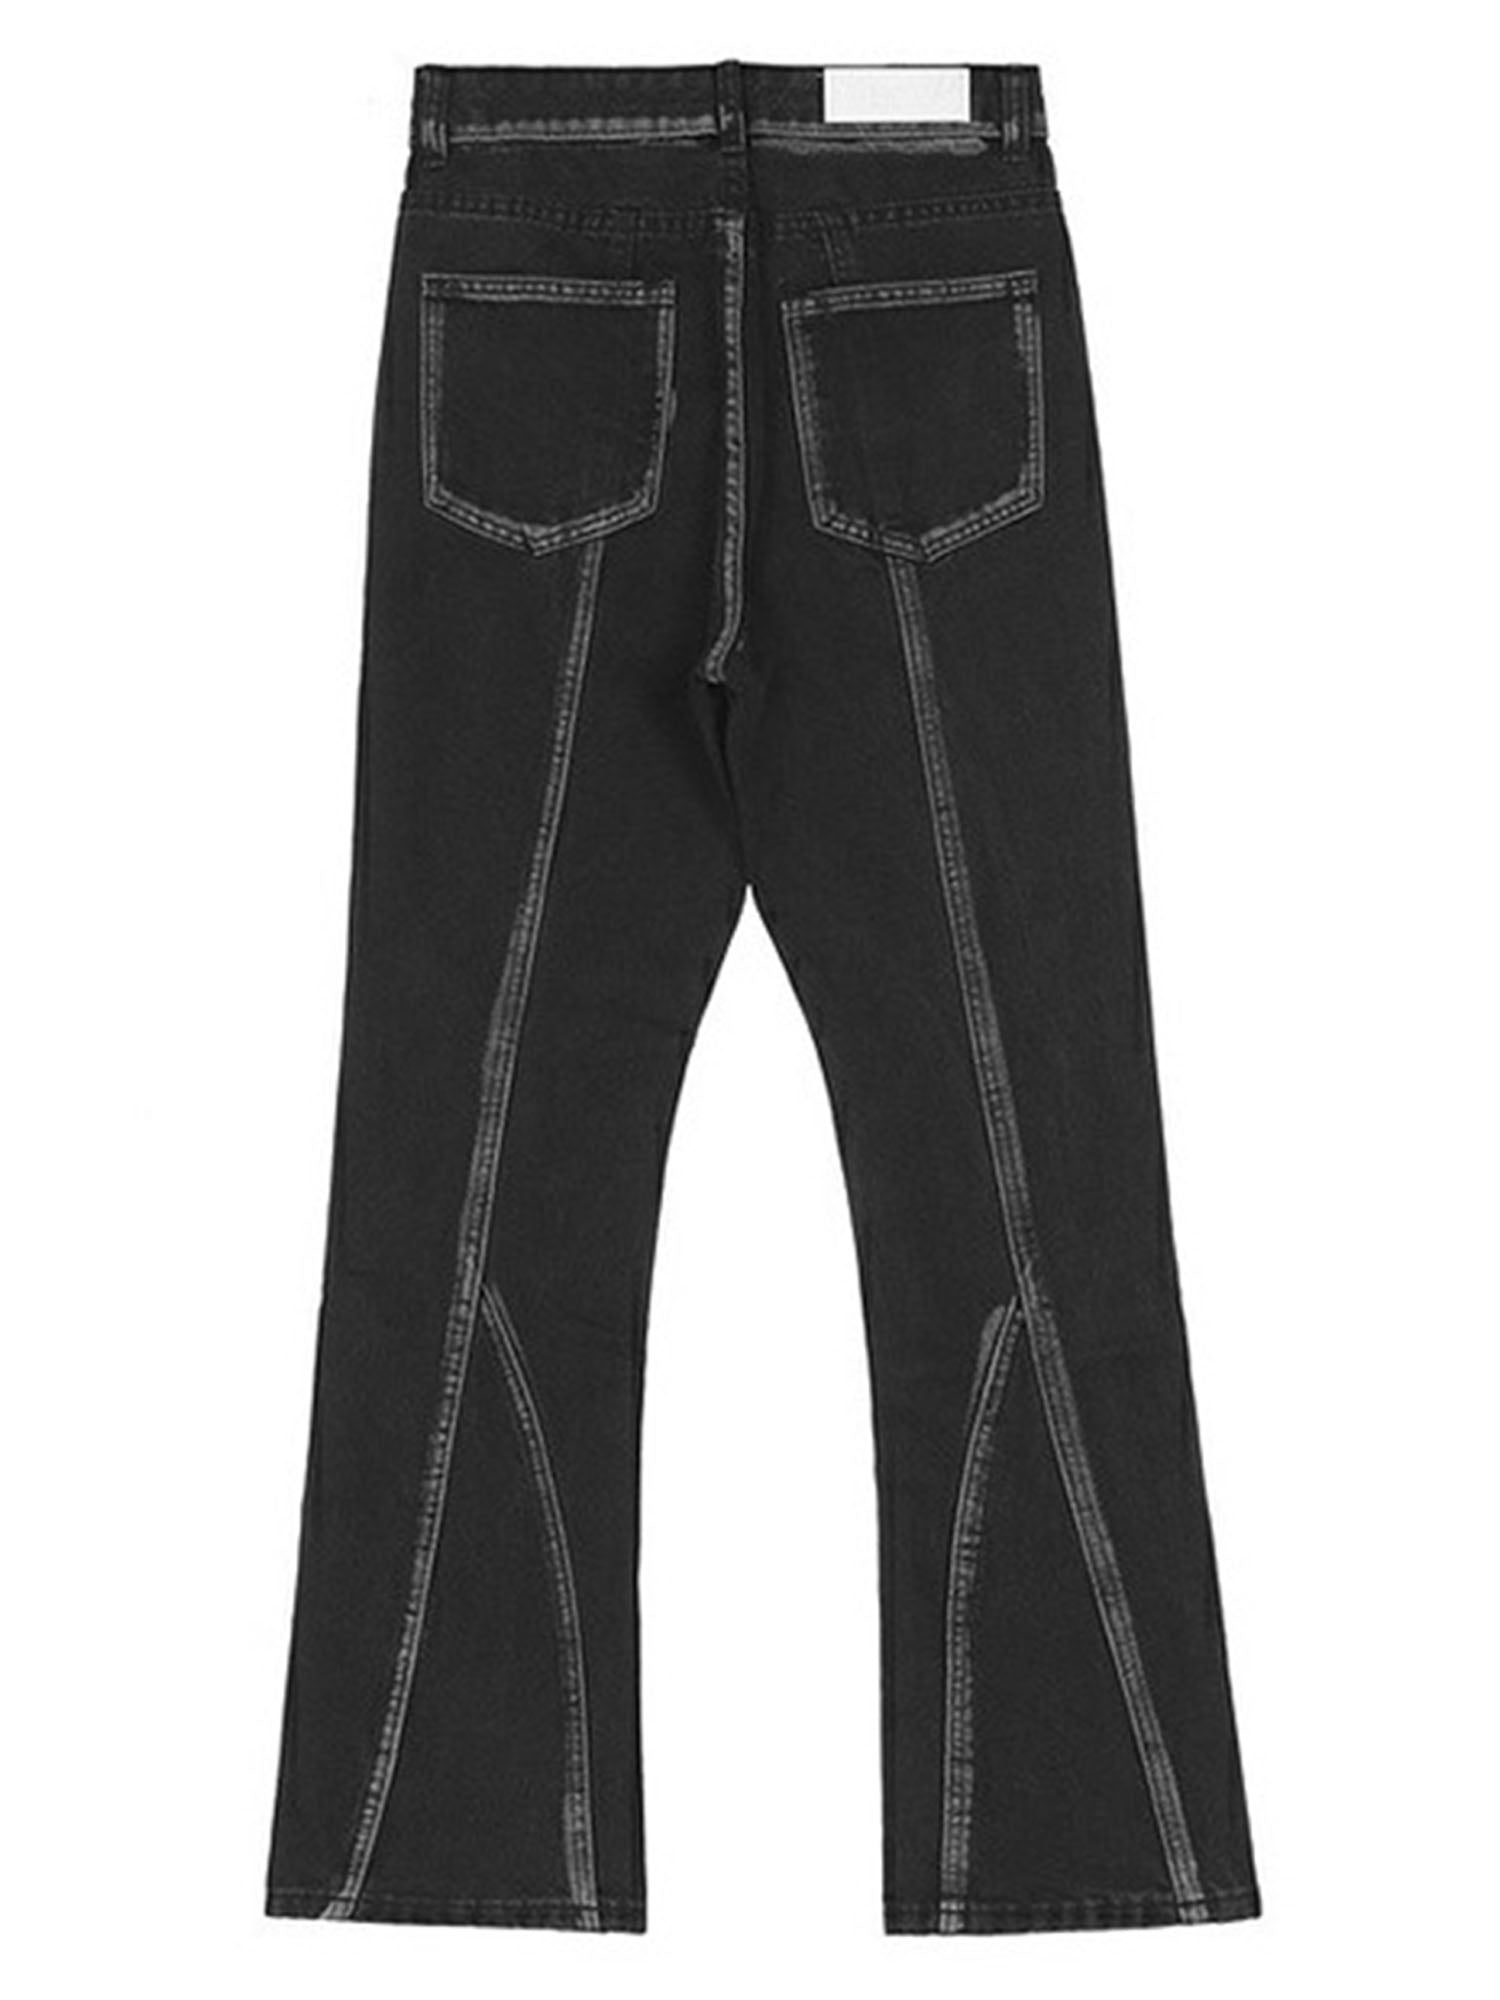 Justnotag Retro Mini Flared Jeans - Délavage